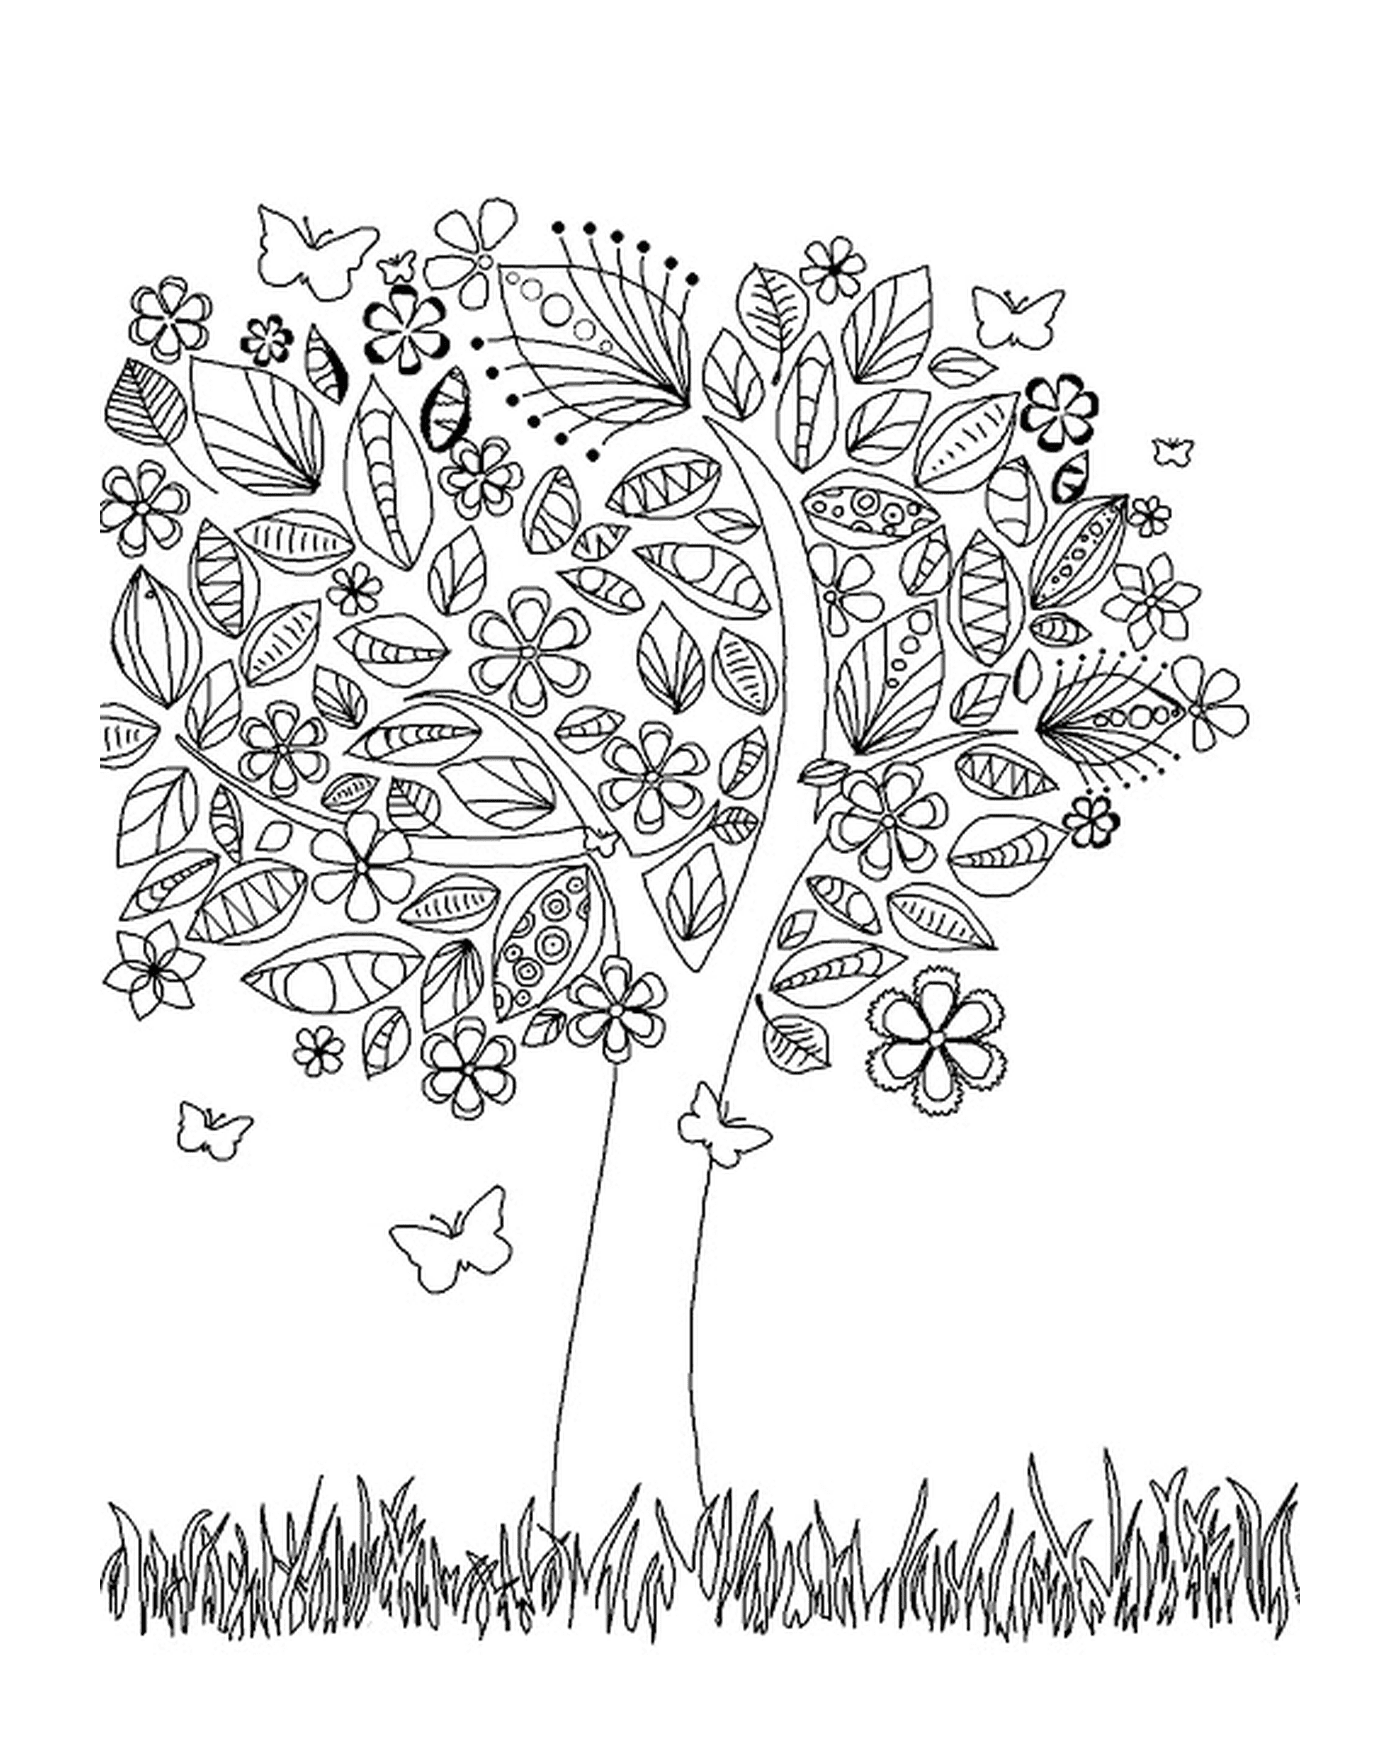   Un arbre en fleurs 